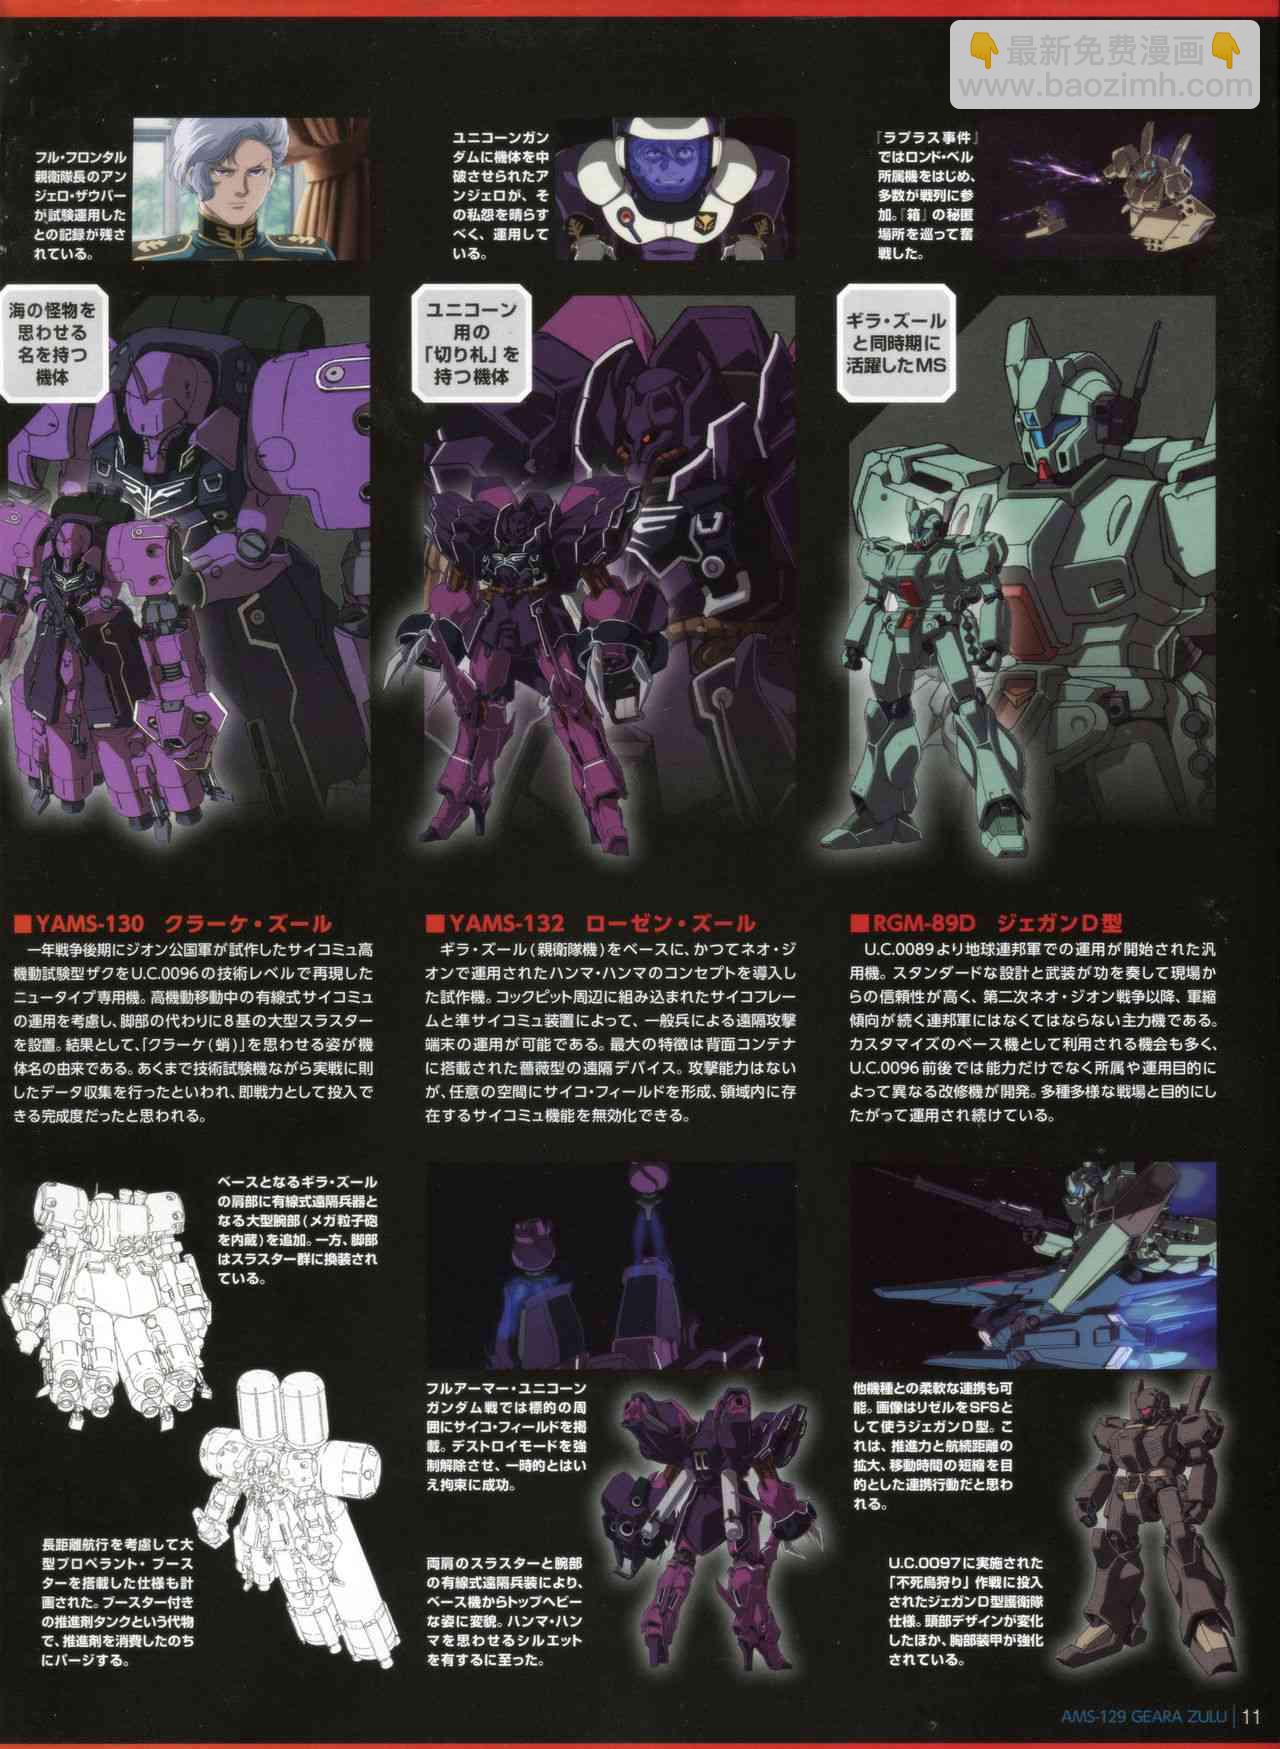 Gundam Mobile Suit Bible - 11卷 - 6